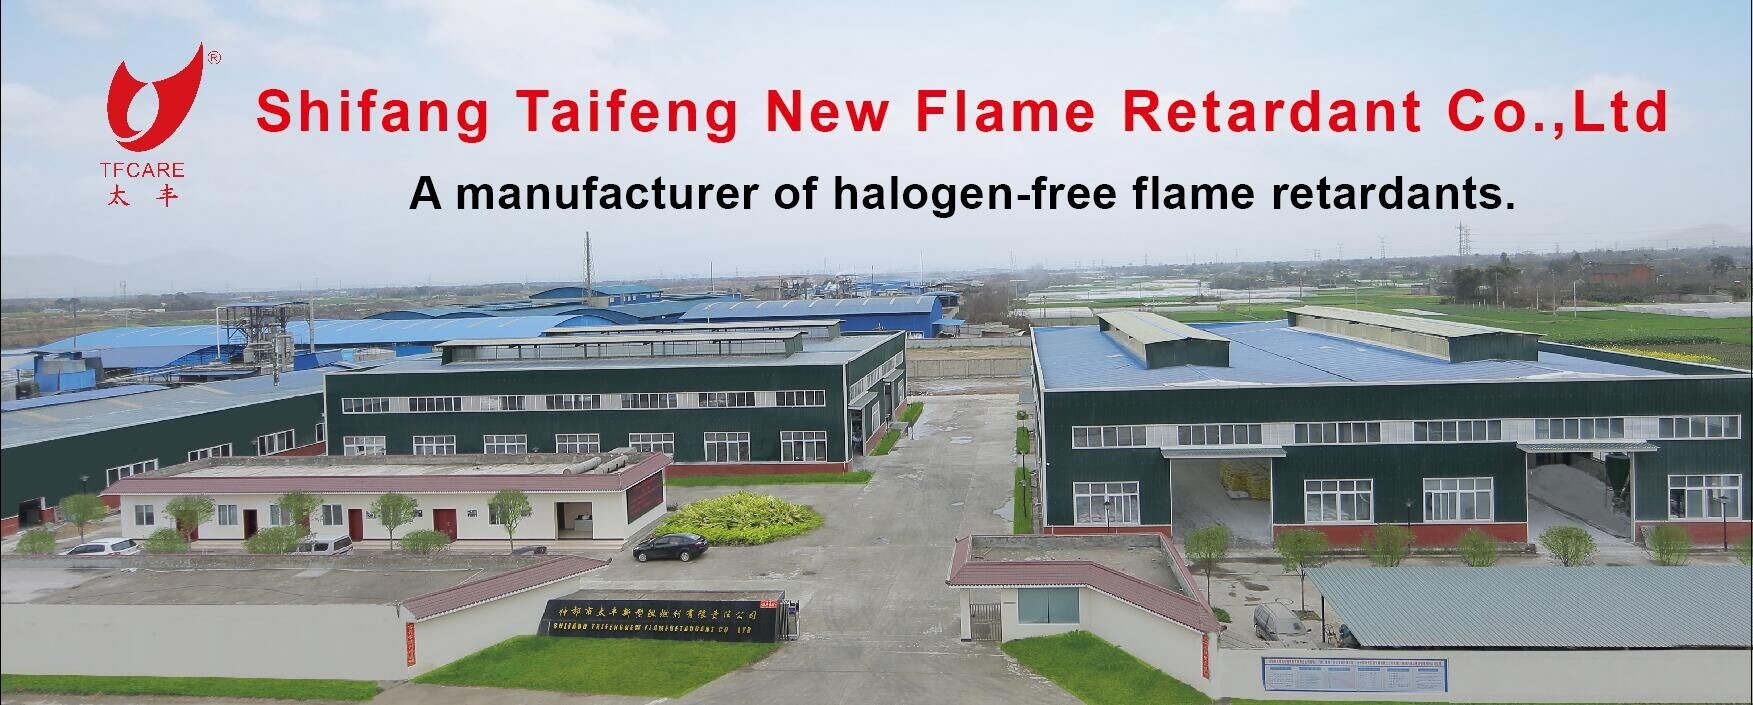 Shifang Taifeng New Flame Retardant Co., Ltd.